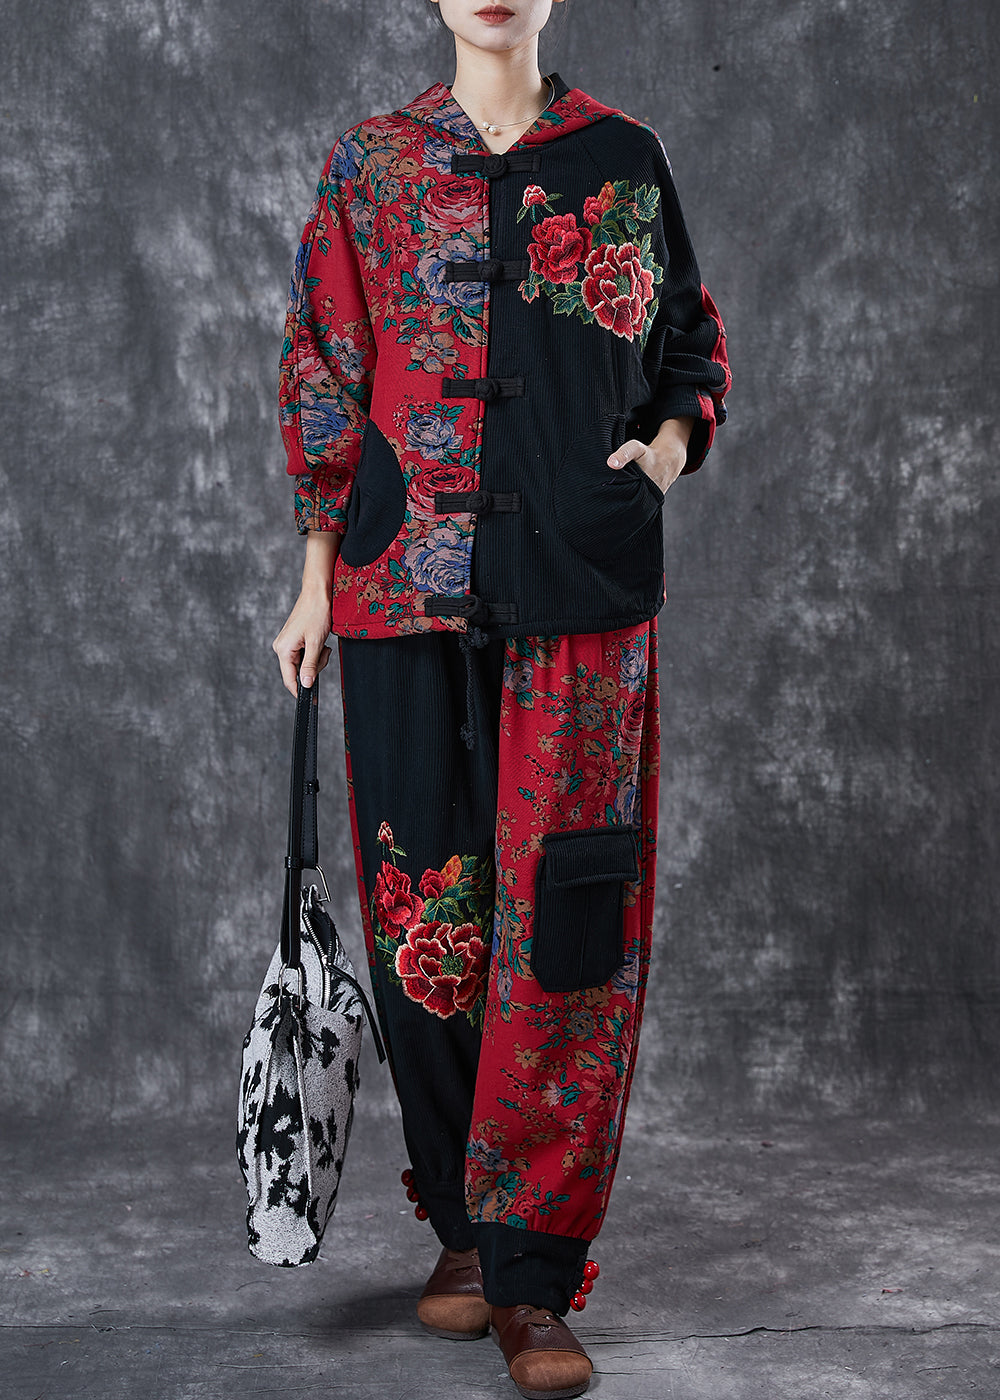 Art Black Asymmetrical Patchwork Warm Fleece Two Piece Set Outfits Spring